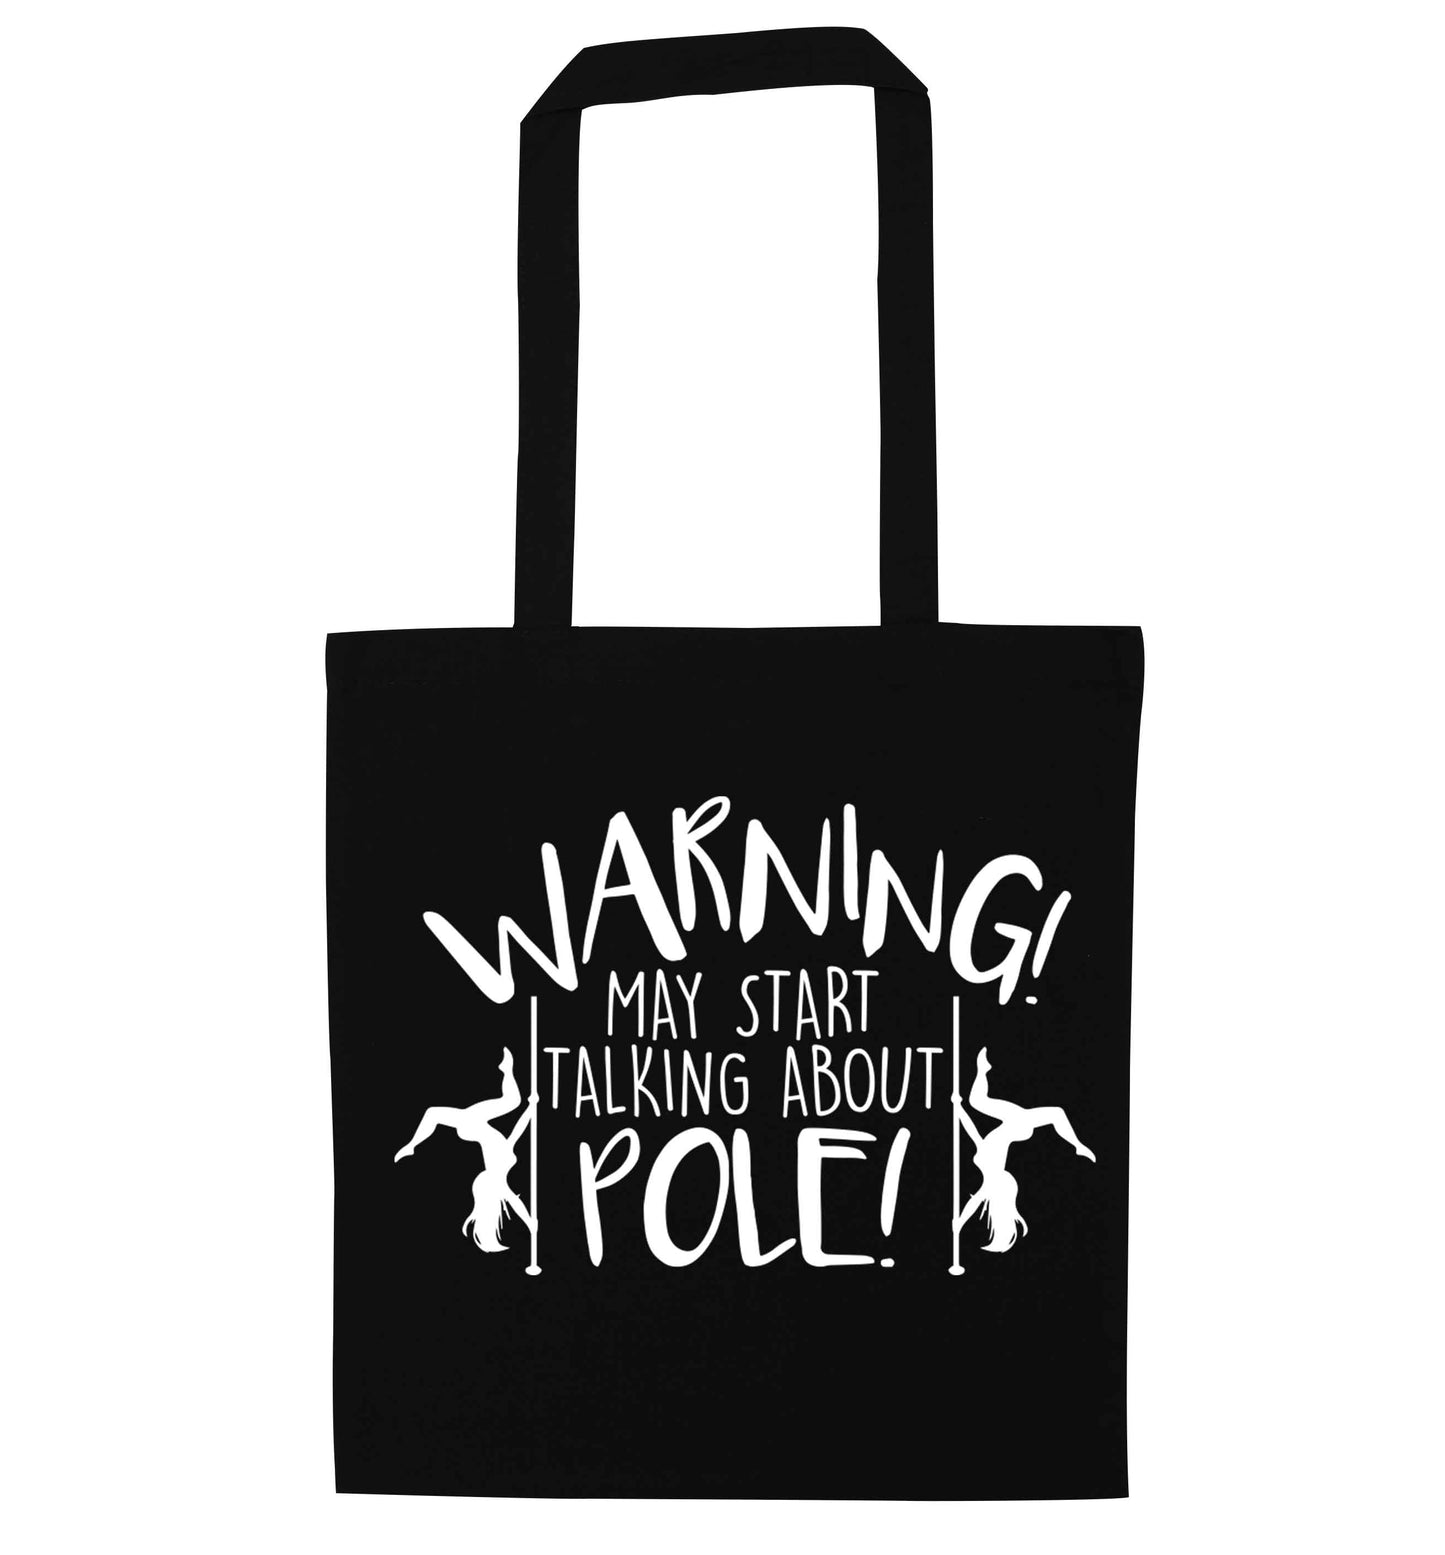 Warning may start talking about pole  black tote bag